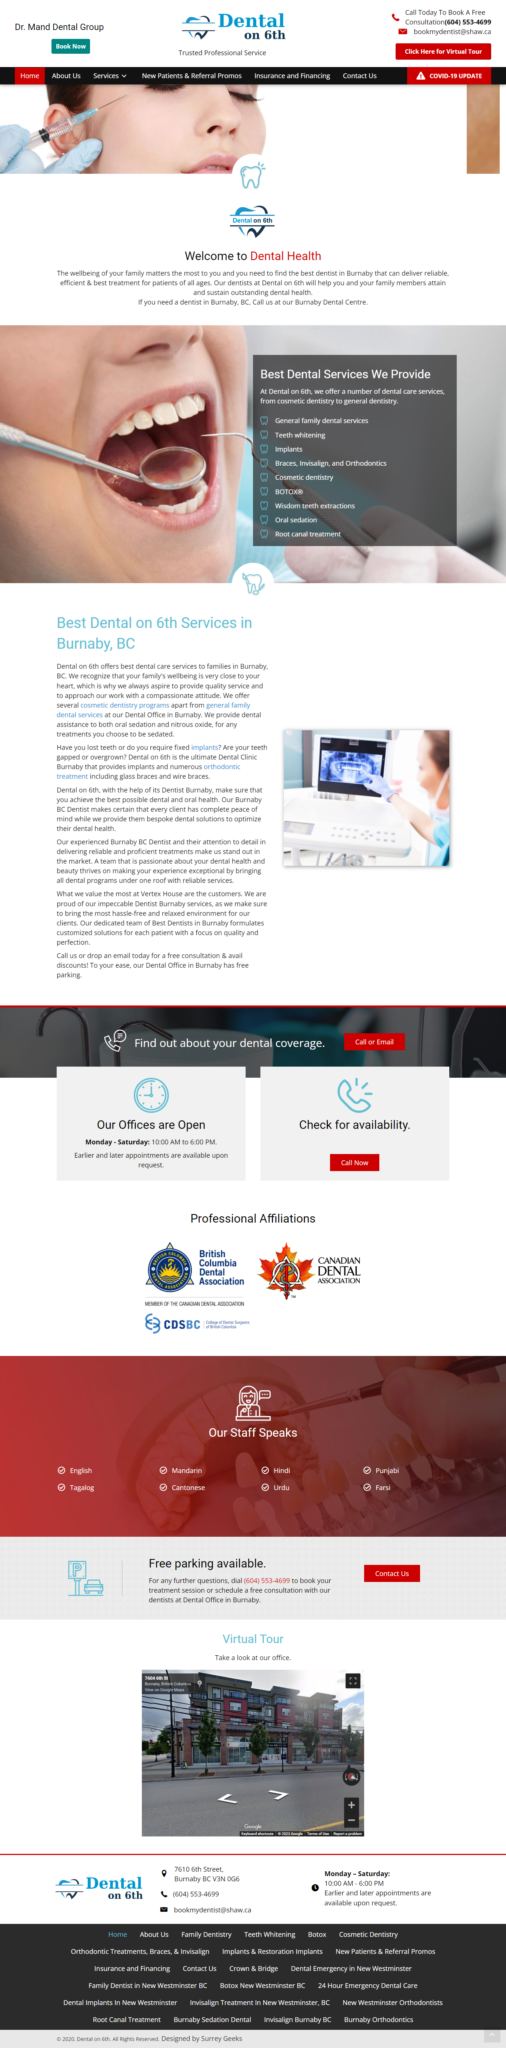 burnaby dental office website design portfolio